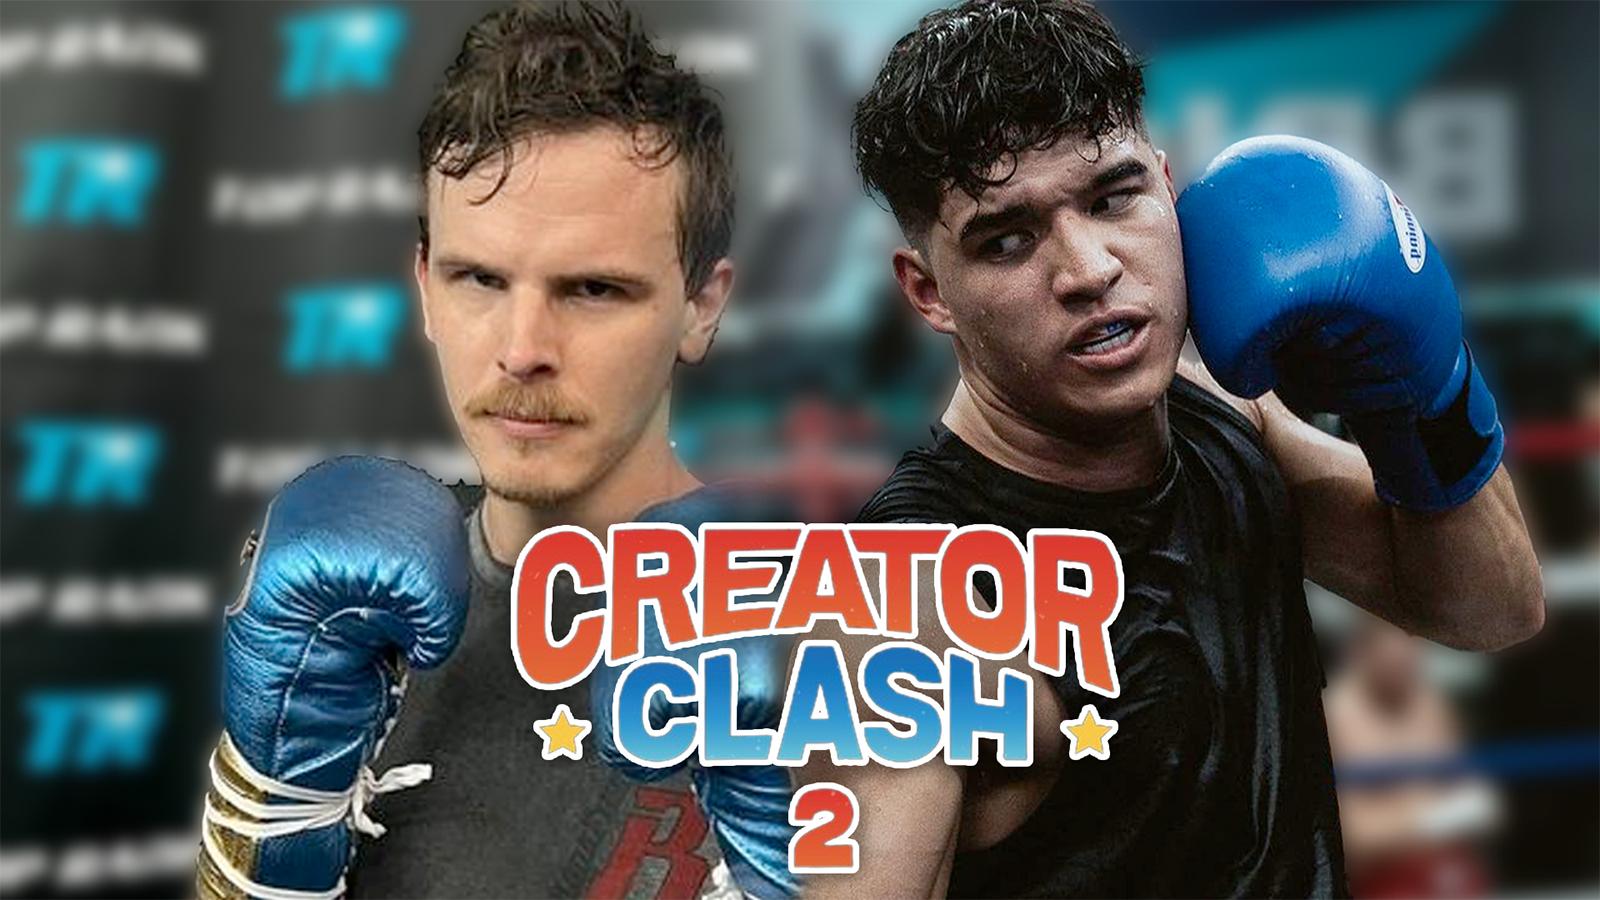 Creator Clash 2: Match Breakdowns